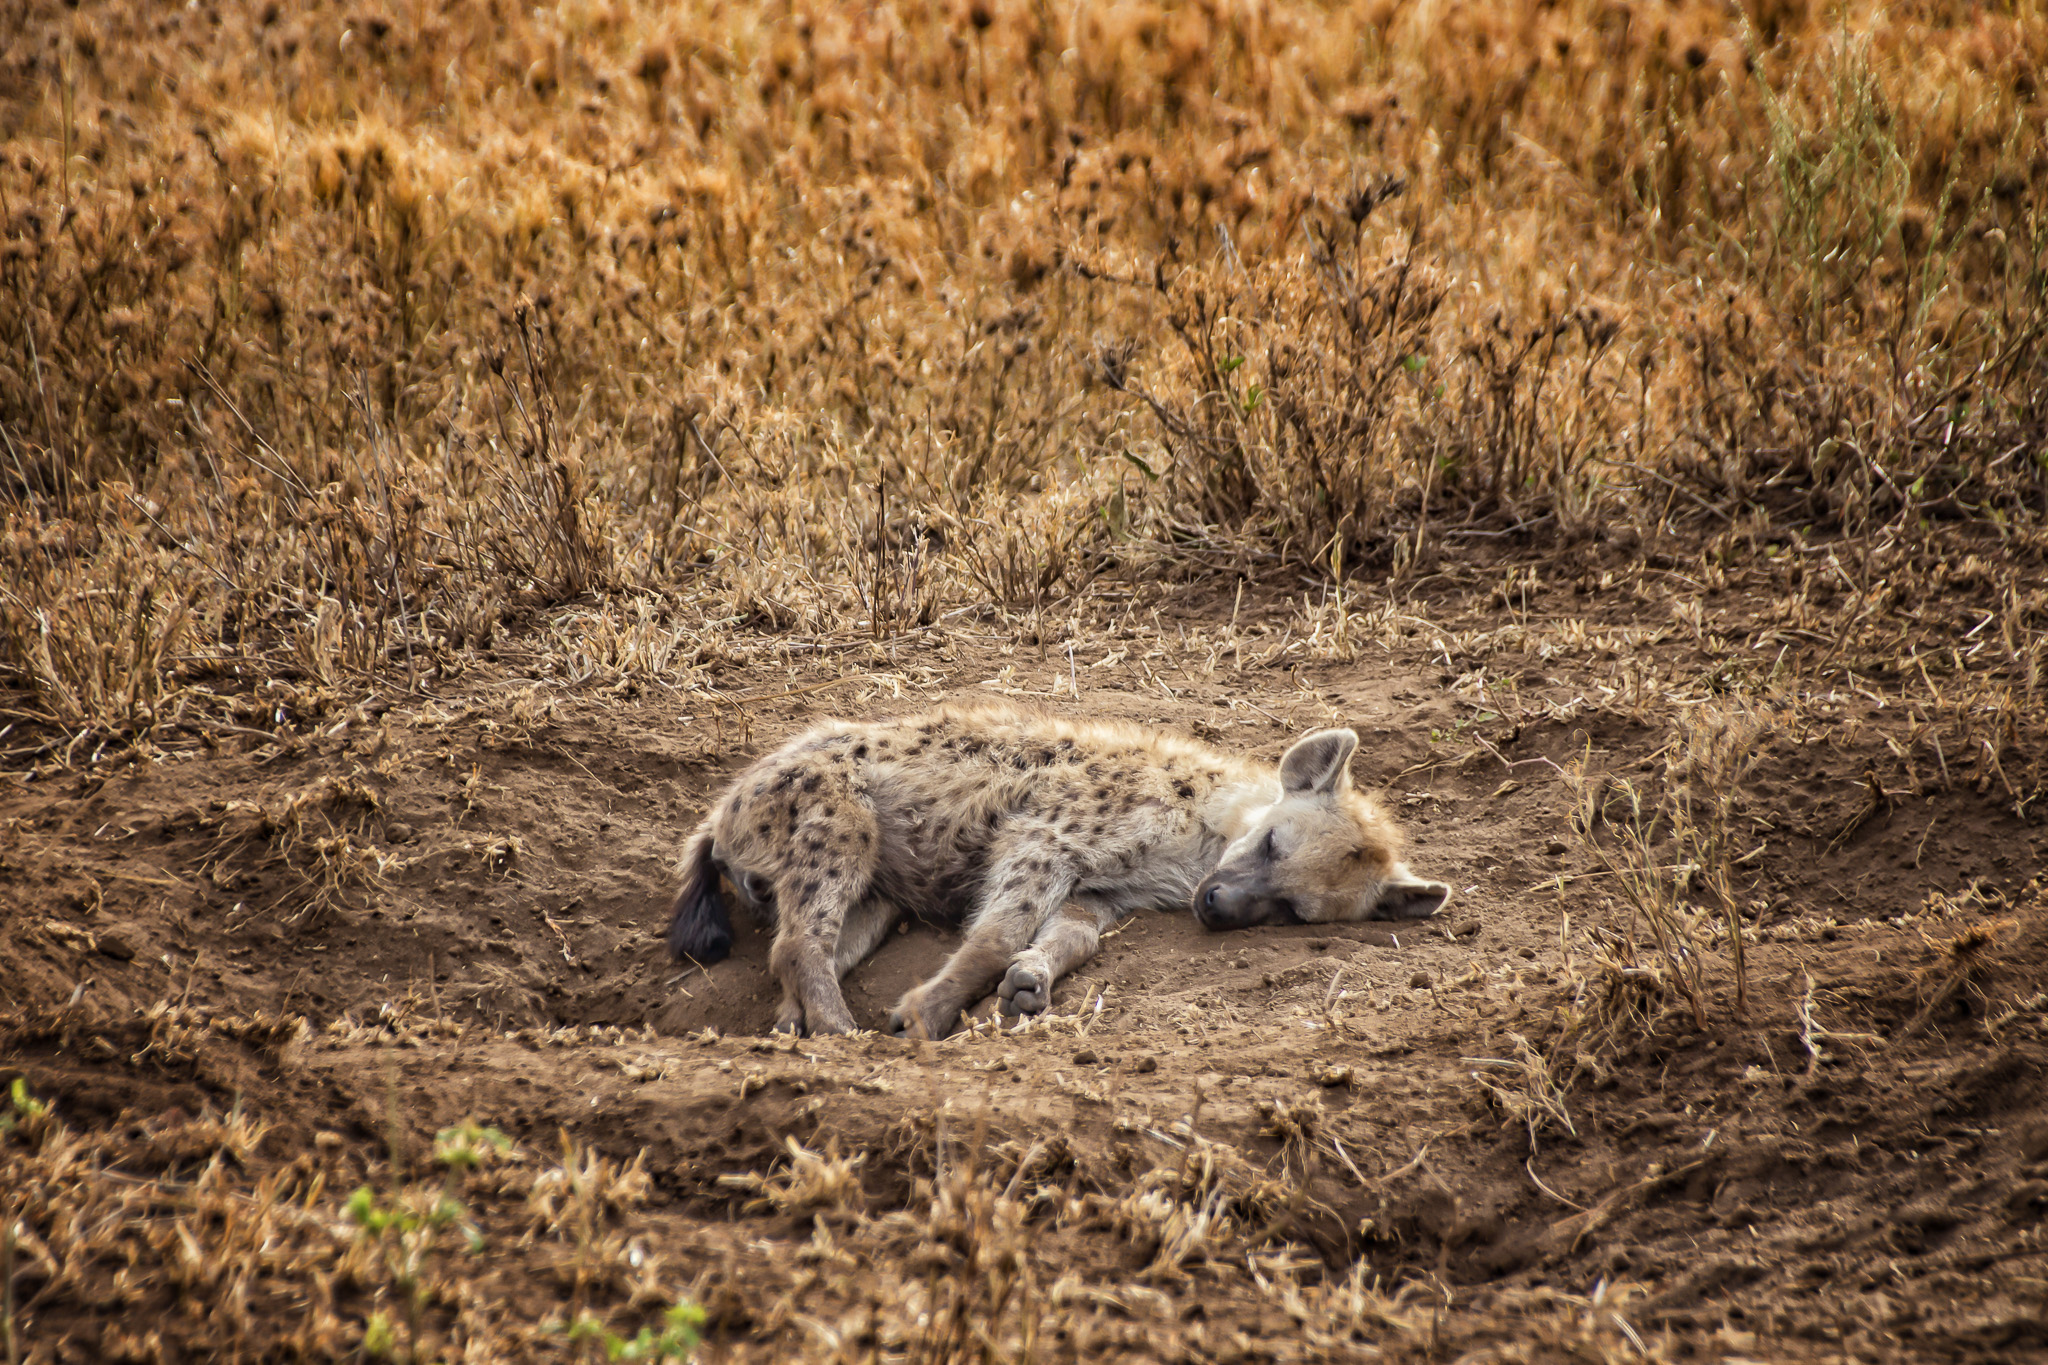 A little, sleeping hyena in Serengeti National Park, Tanzania.